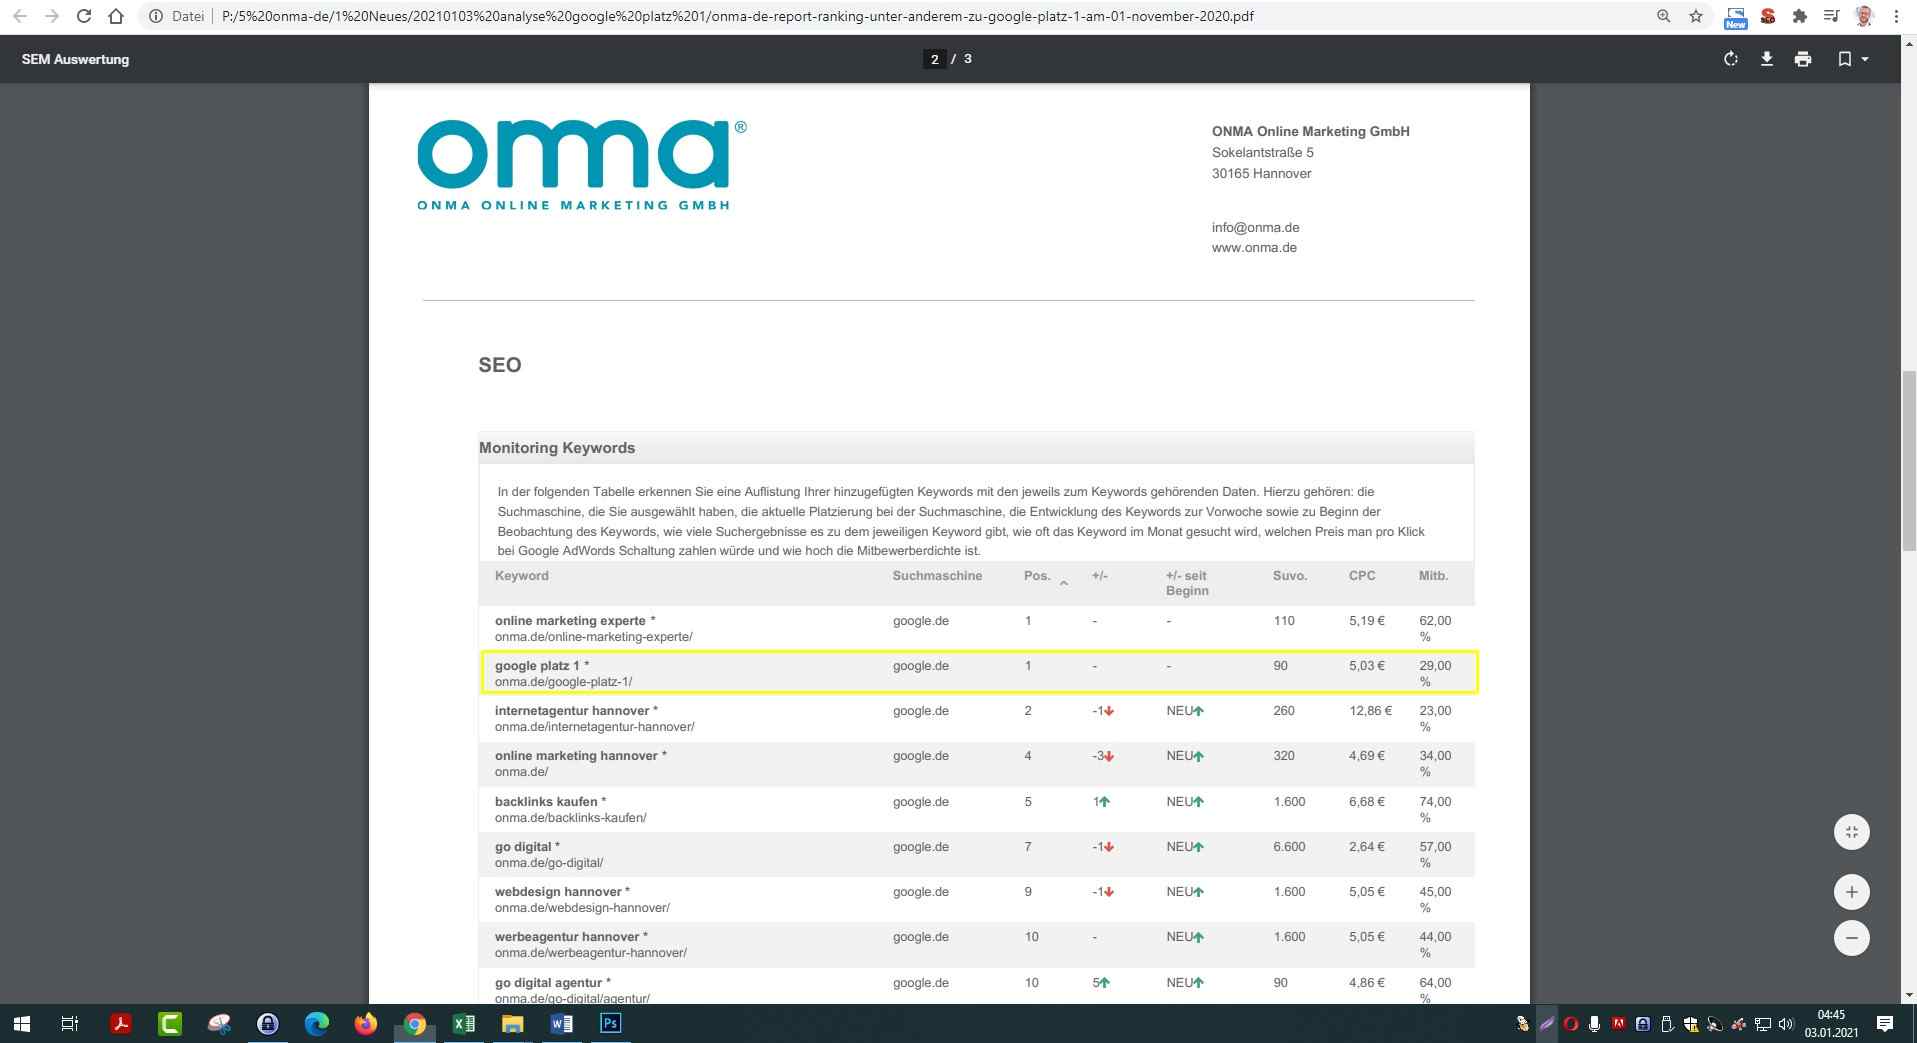 keyword ranking google platz 1 vom onma report